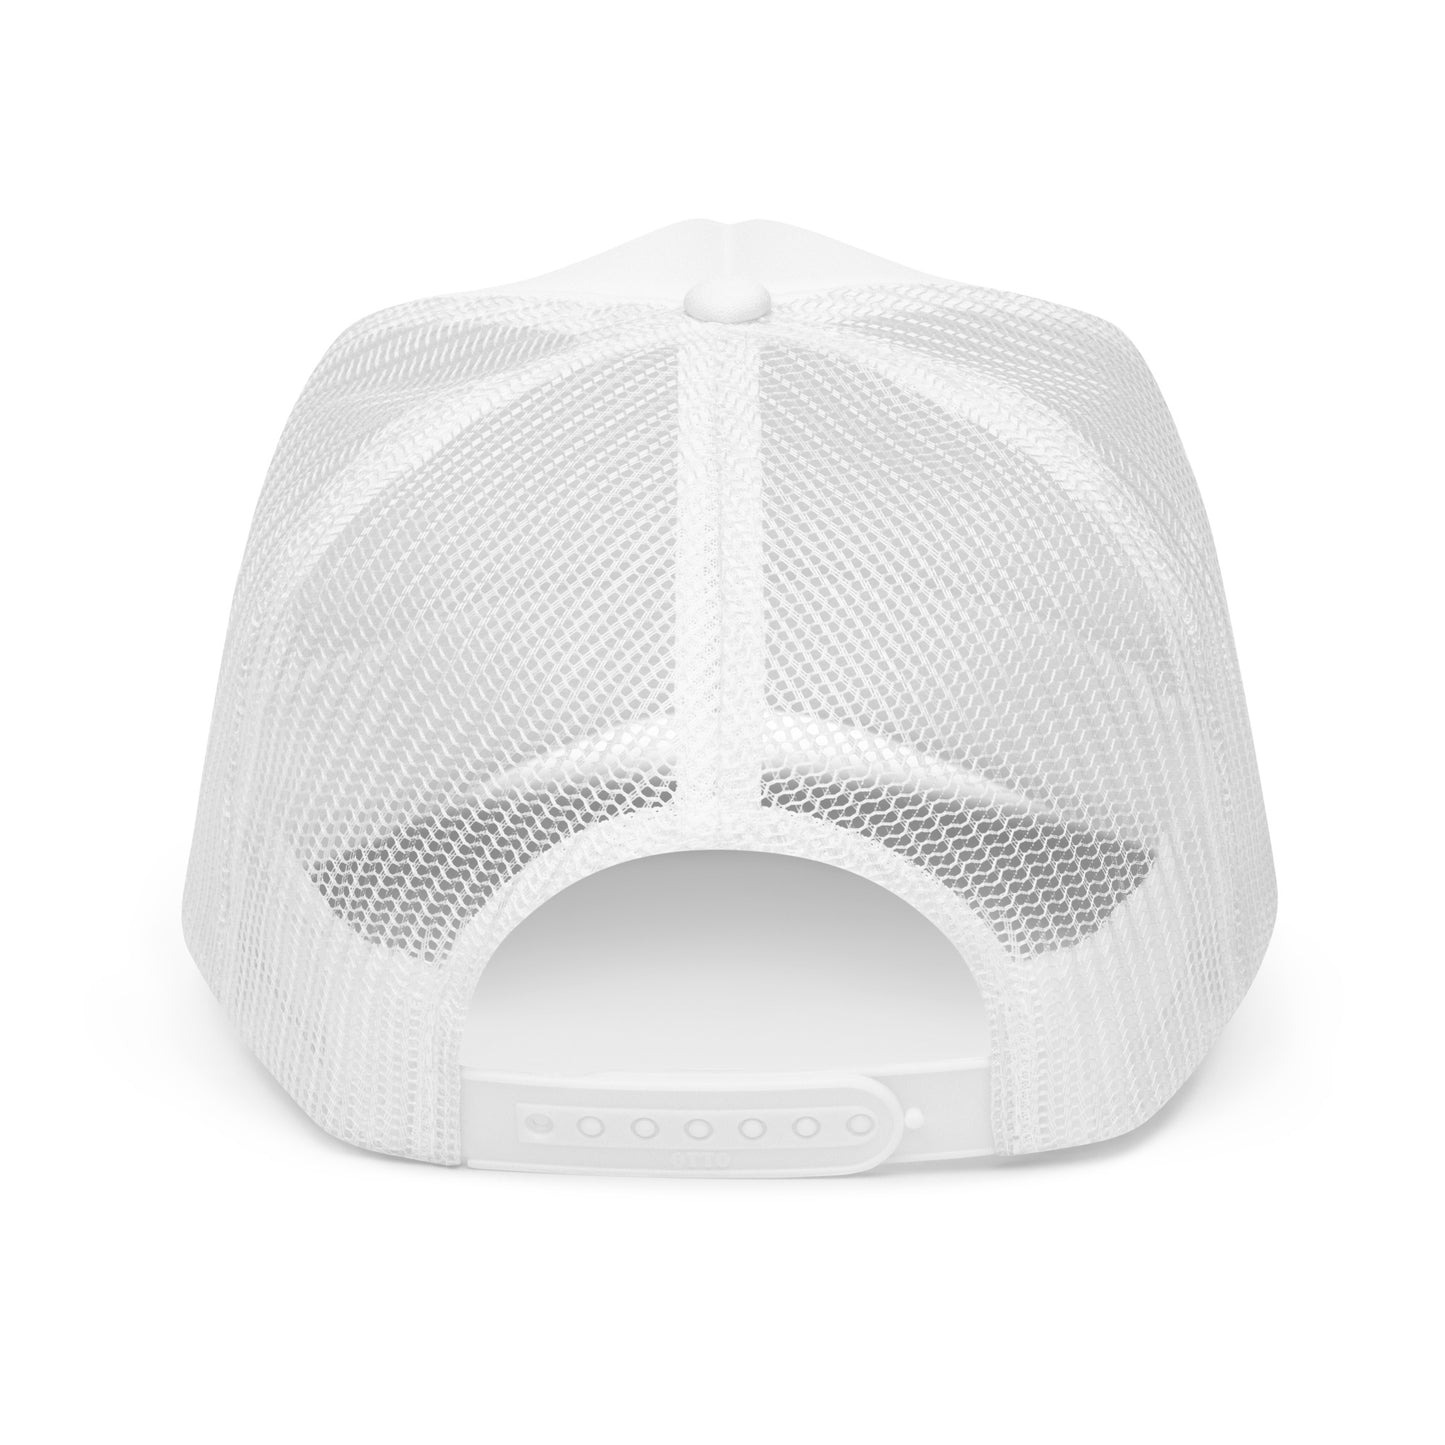 New York Apple Logo Embroidered Foam trucker hat